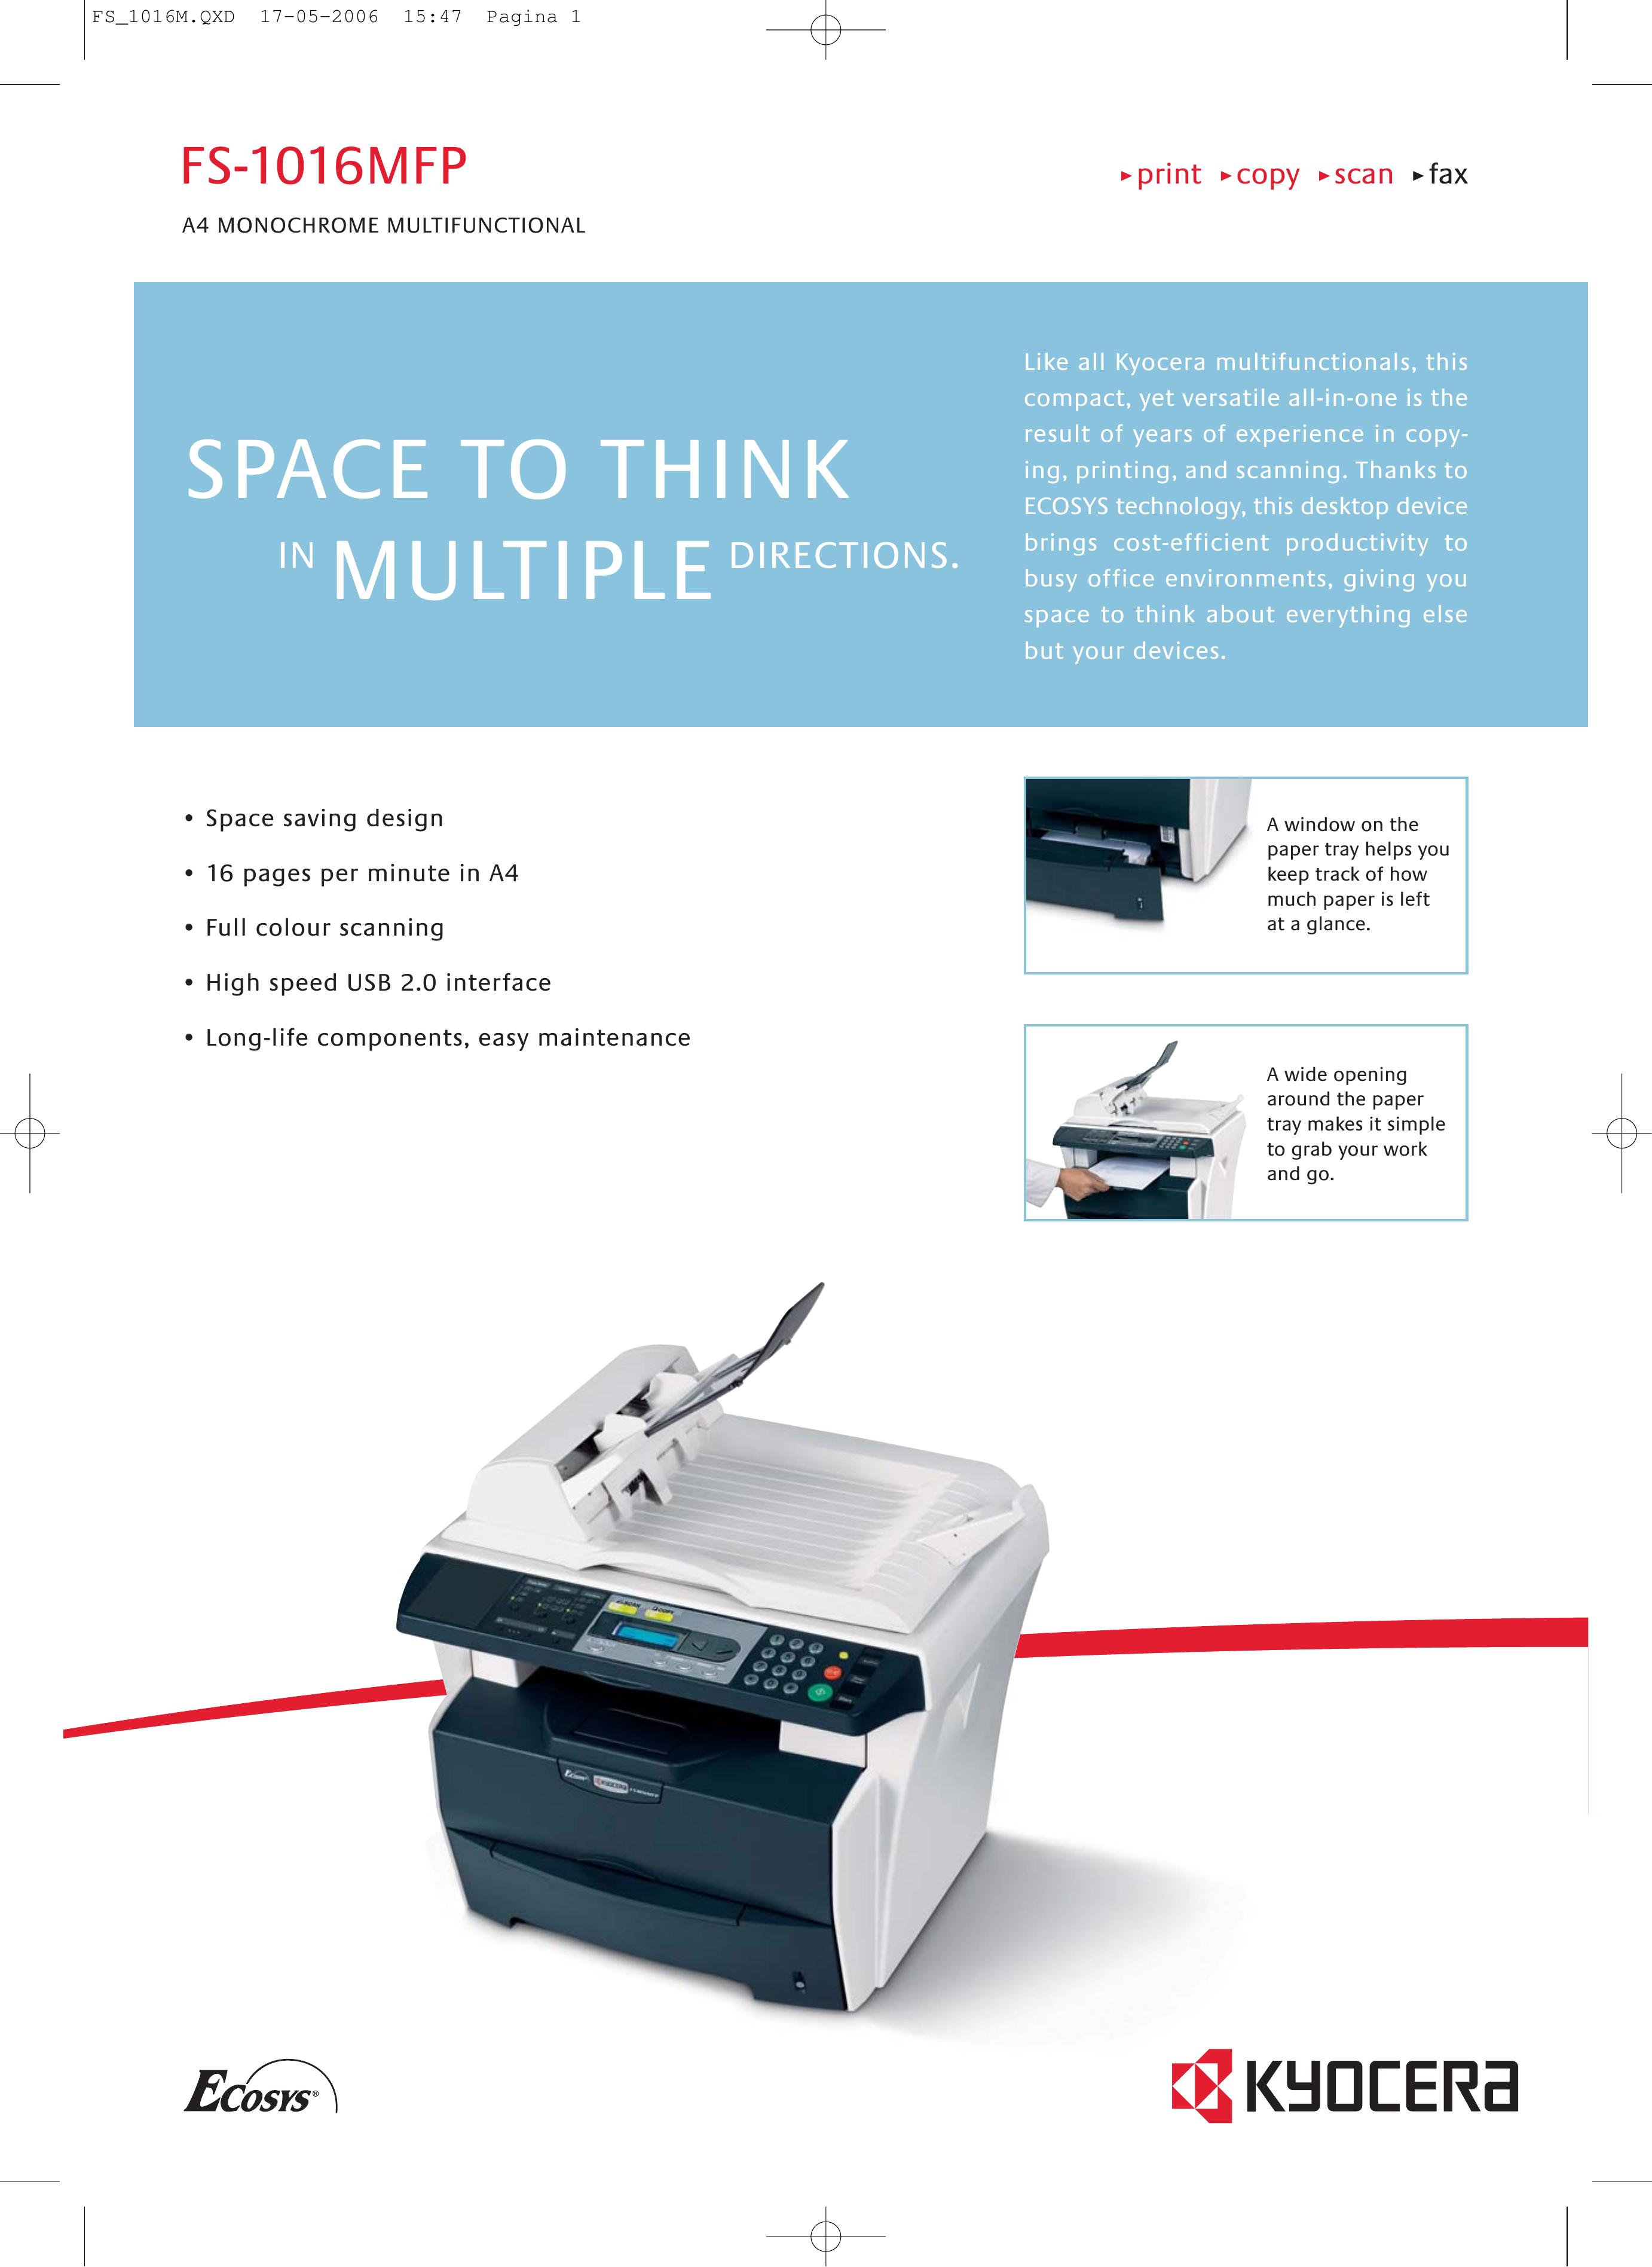 Kyocera FS-1016MFP Photo Printer User Manual